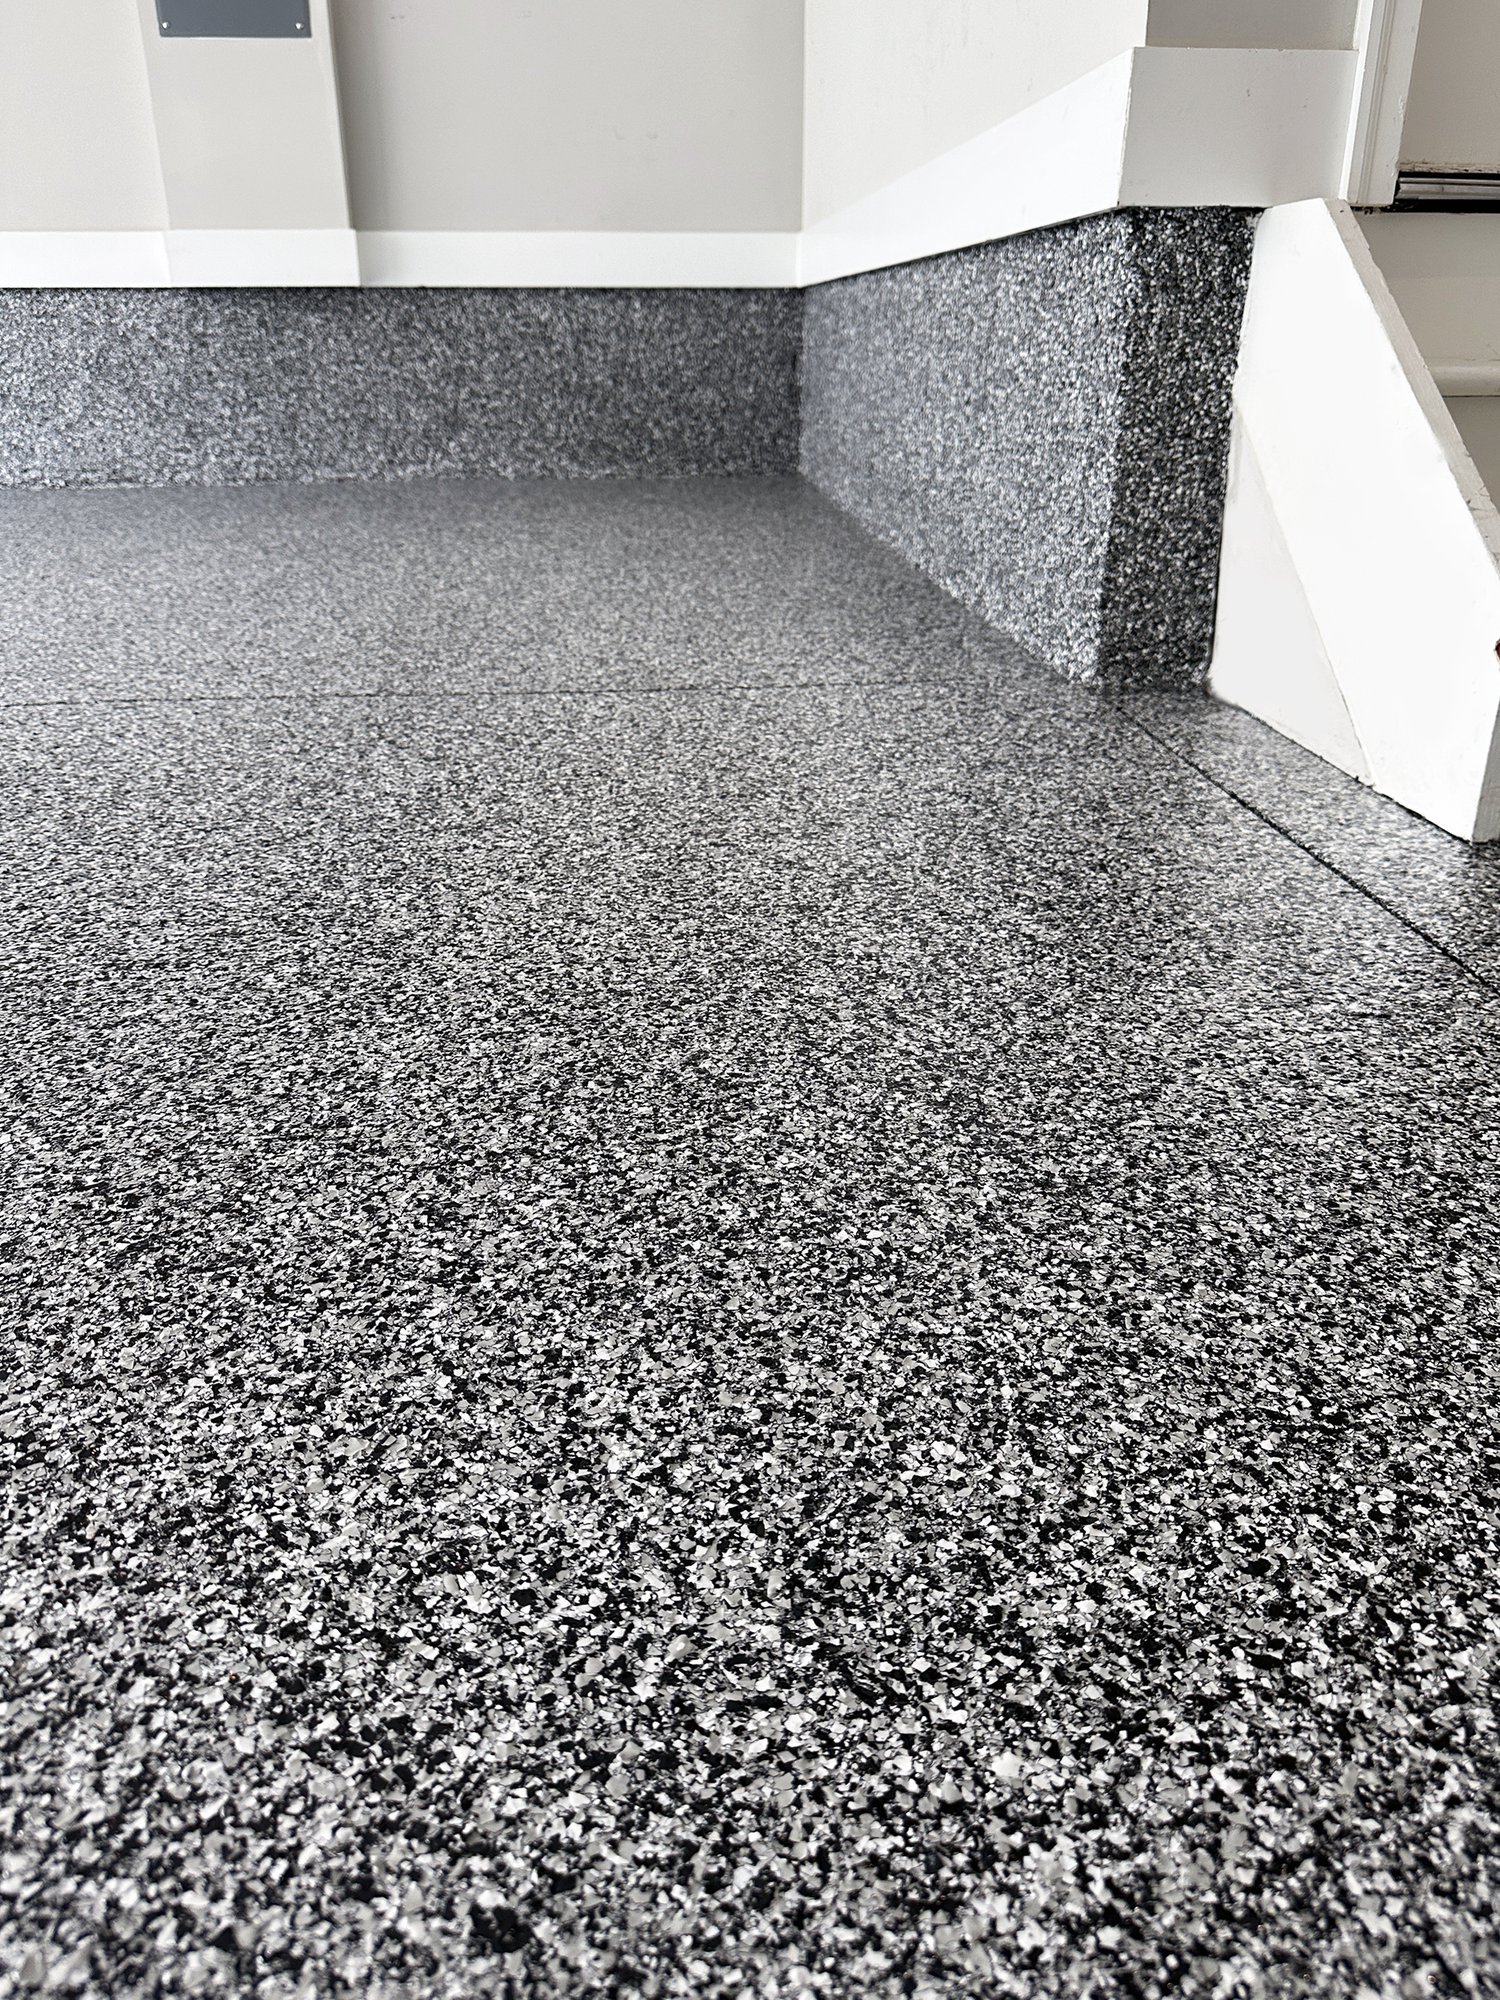 Epoxy Garage Floor Quote - Garage Floors in Atlanta — Grindkings Atlanta  Polished Concrete